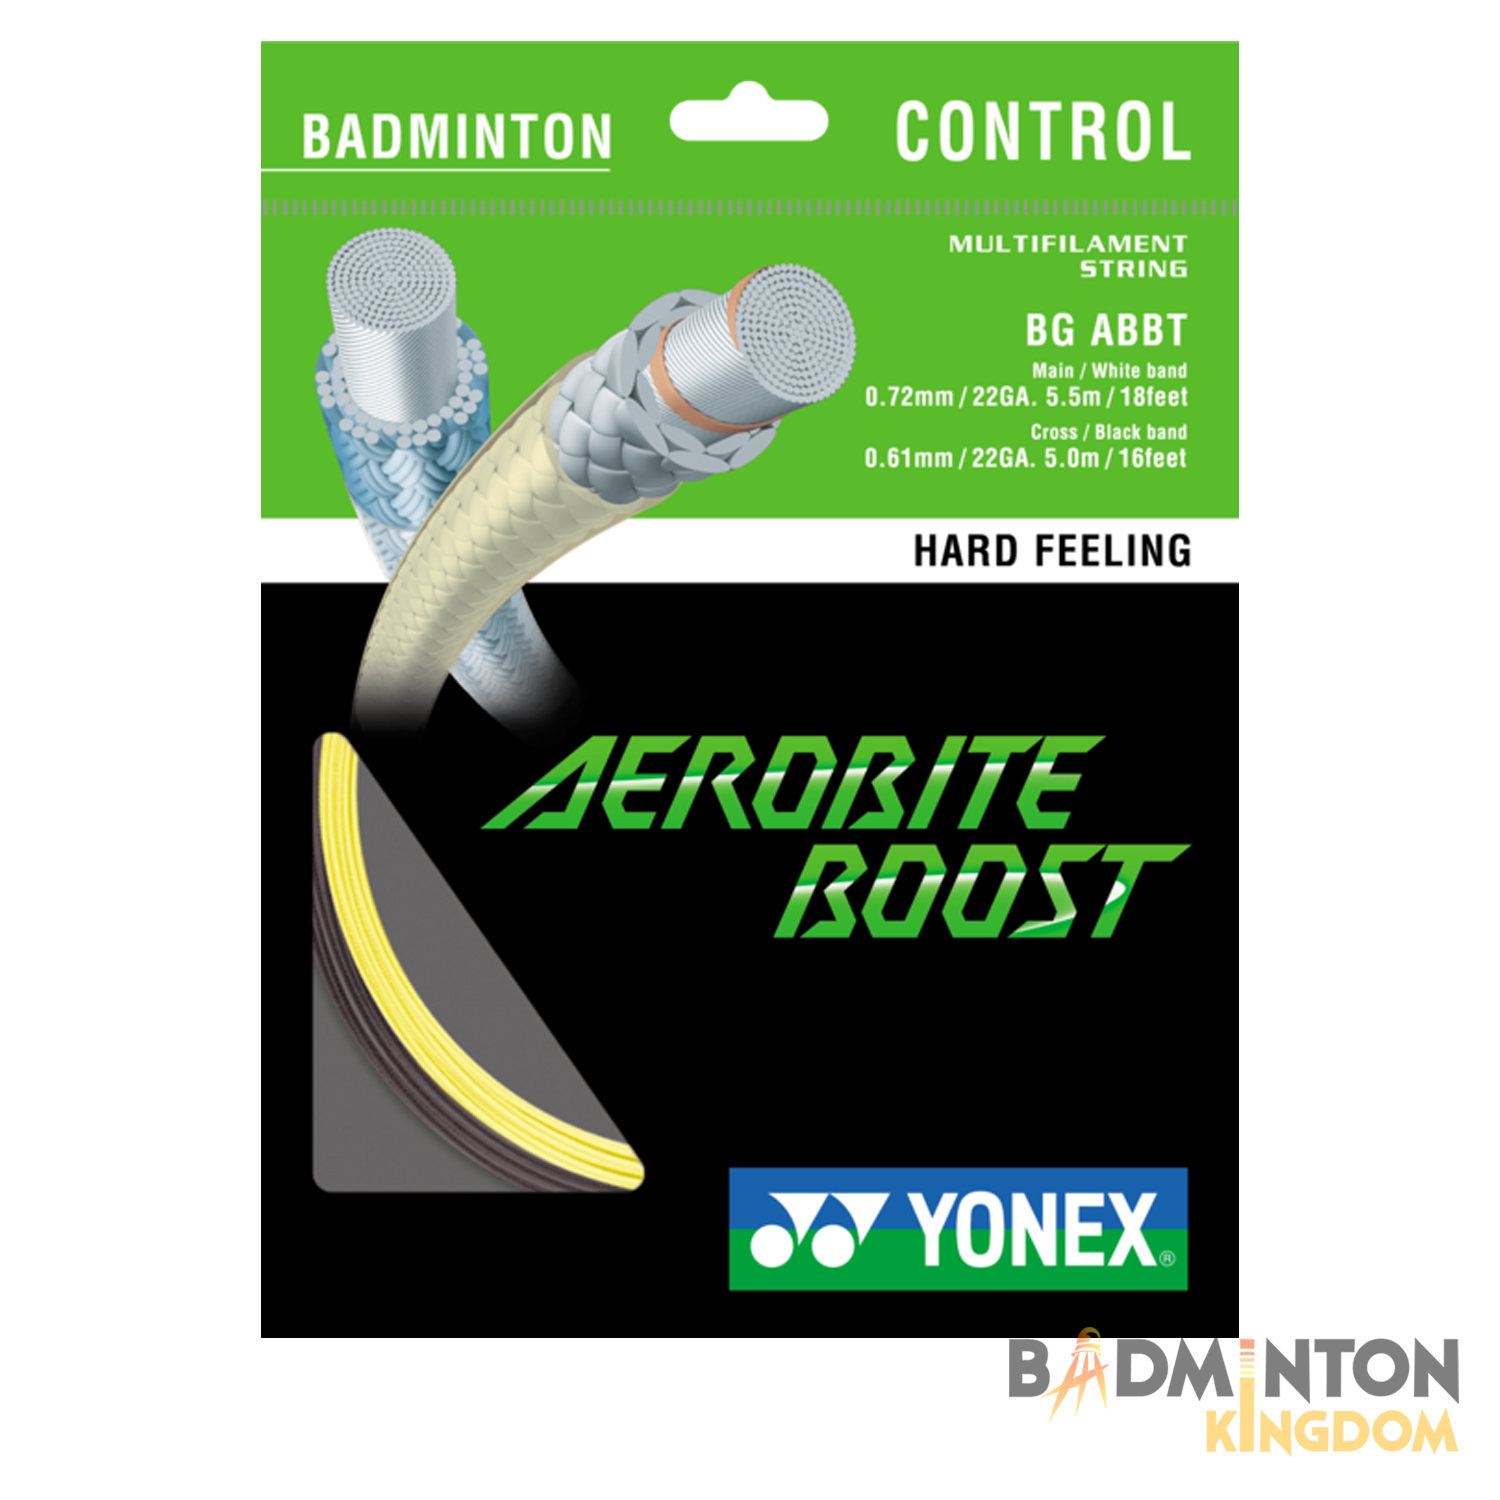 yonex-aerobite-boost-badminton-string-single-set